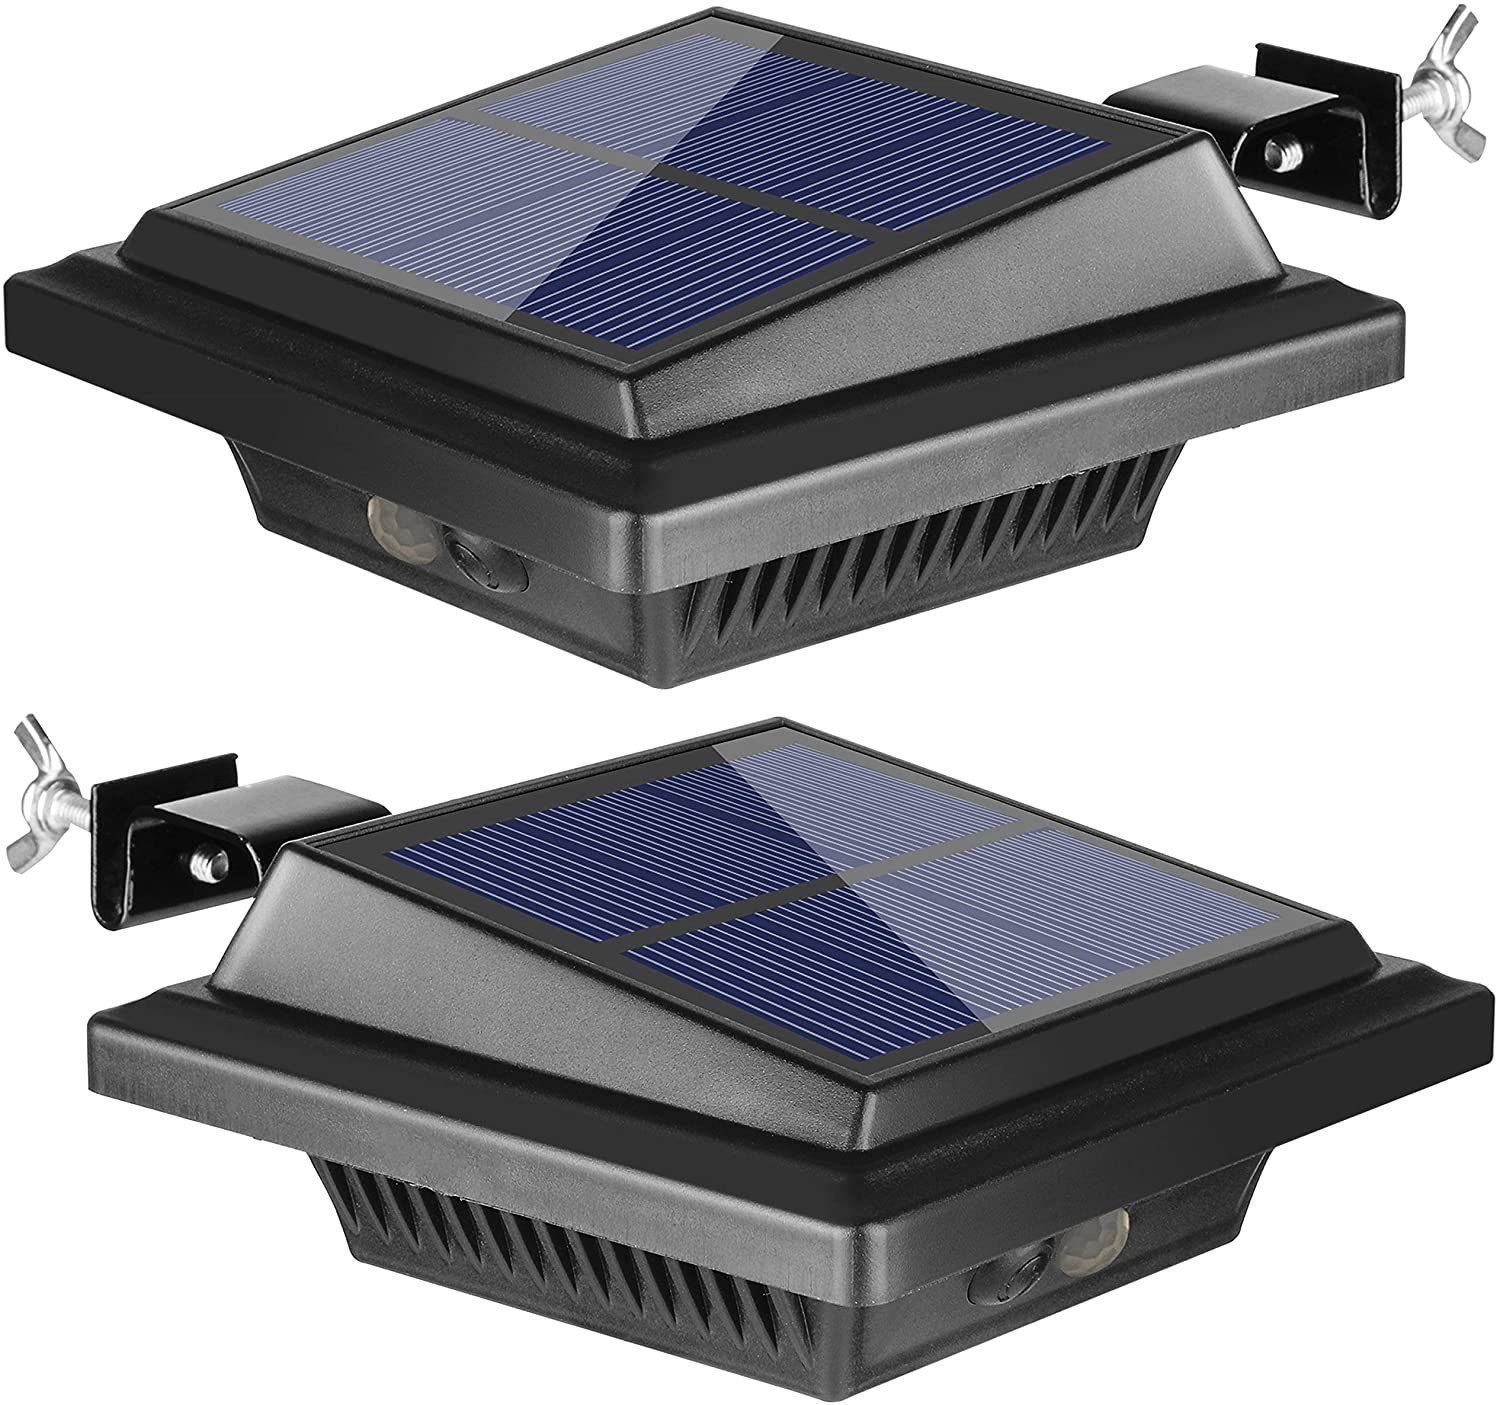 4Stk.40LED Dachrinnenleuchte Solarleuchte, Home Bewegungsmelder safety LED